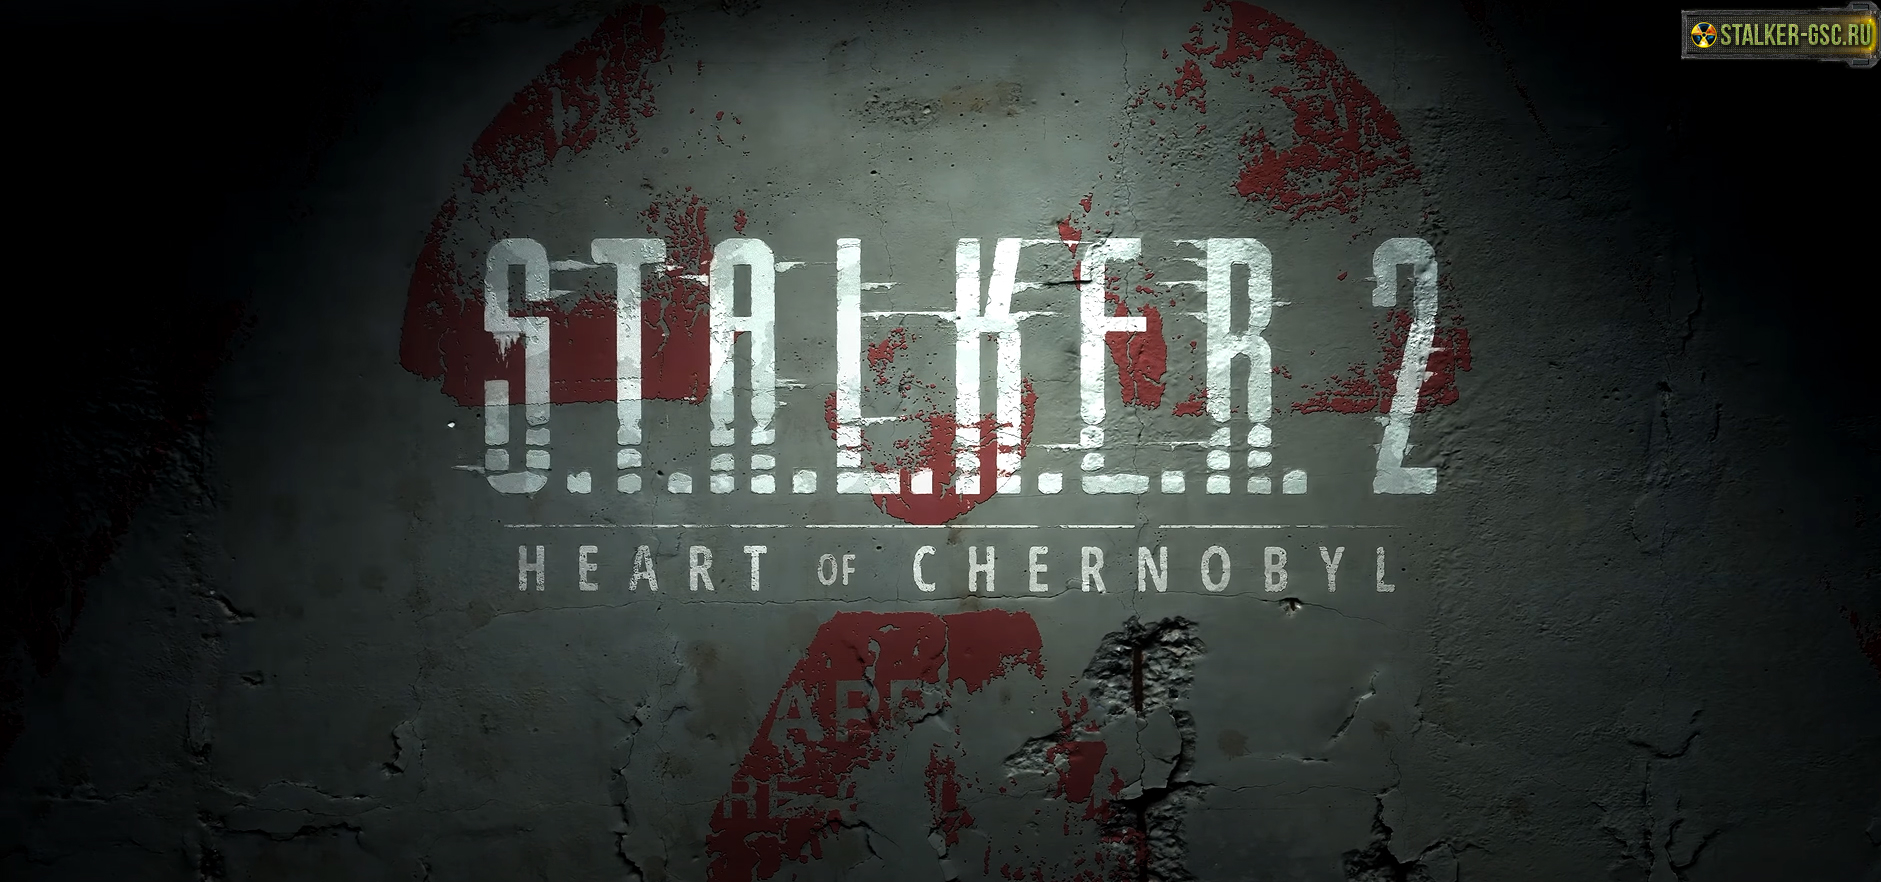 GSC Game World перенесла выход S.T.A.L.K.E.R. 2: Heart of Chernobyl на конец года